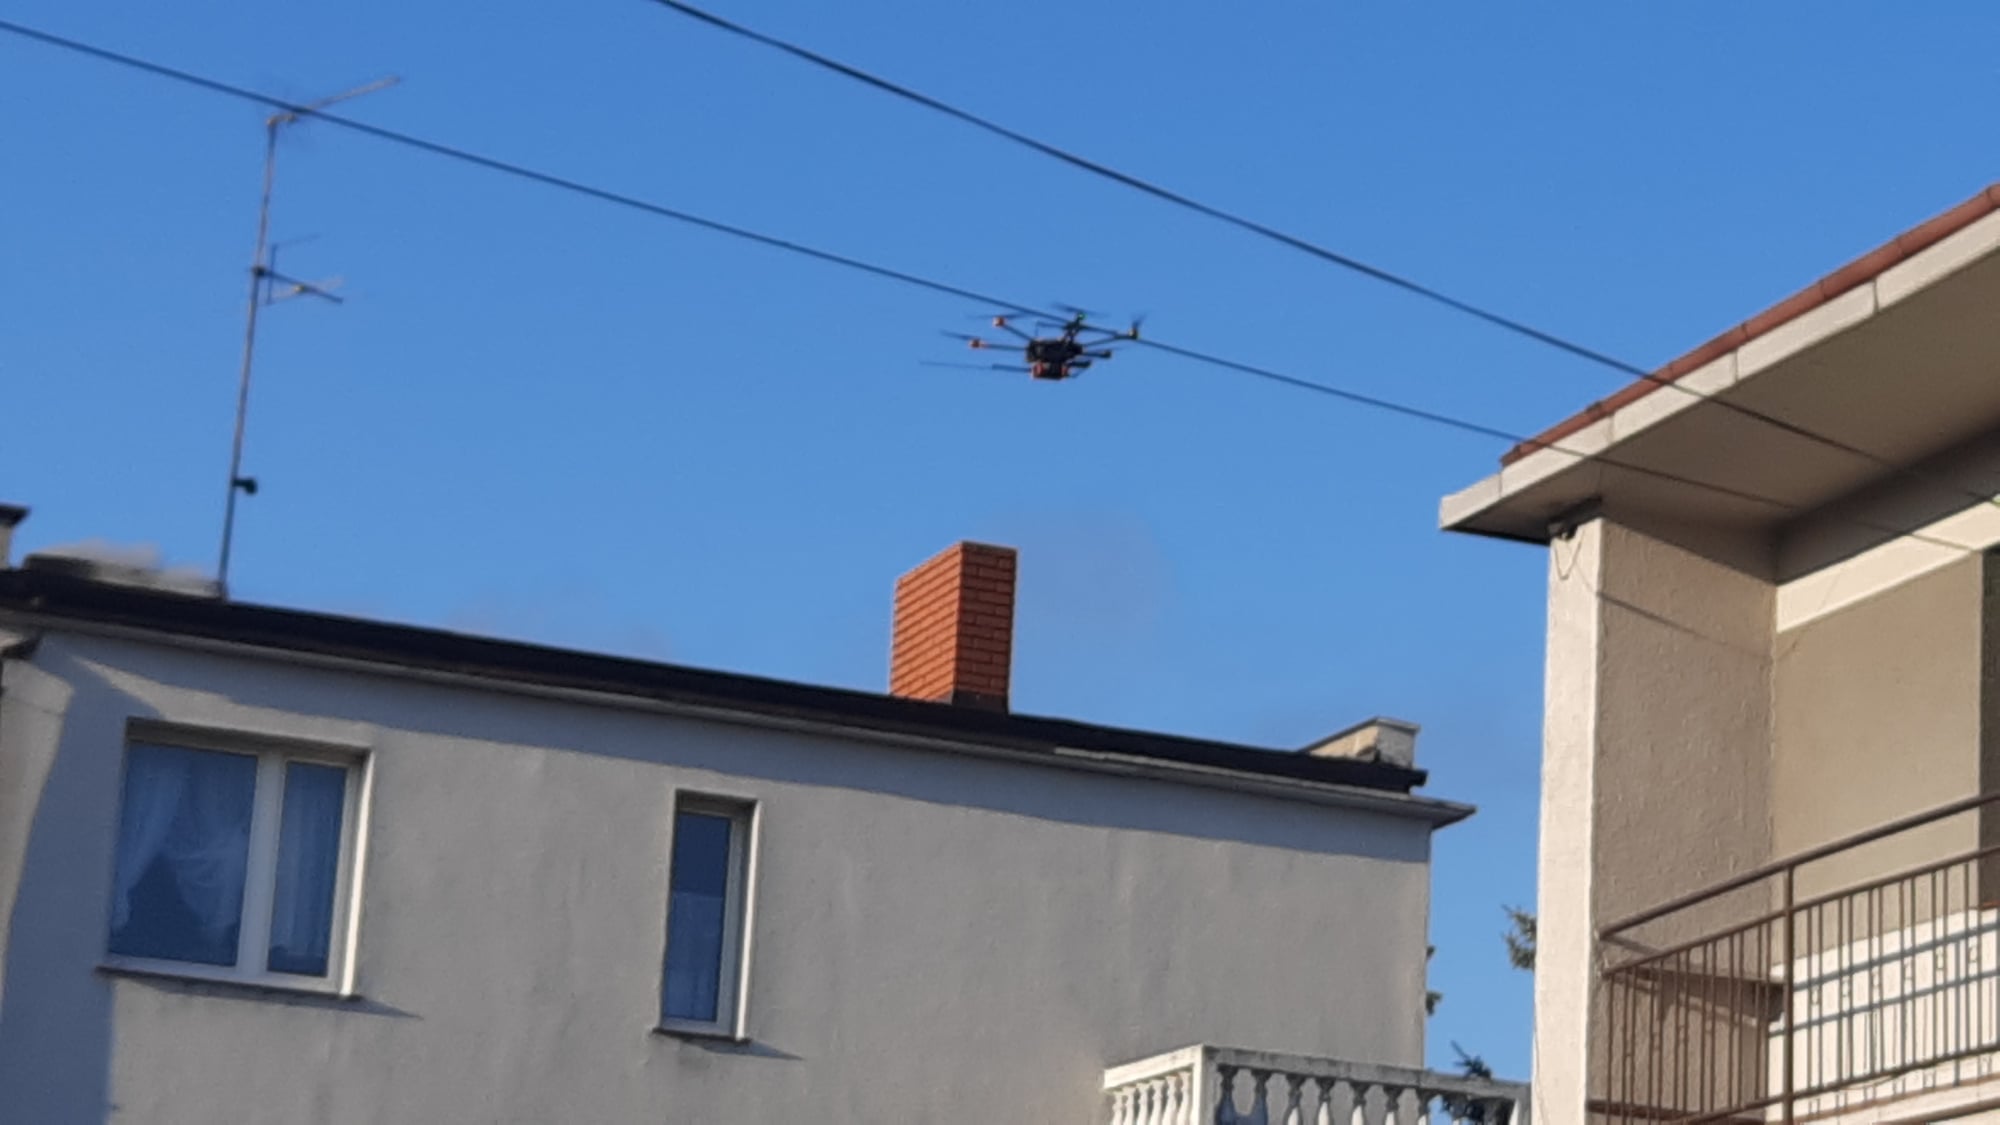 Dron straży miejskiej nad Piaskami